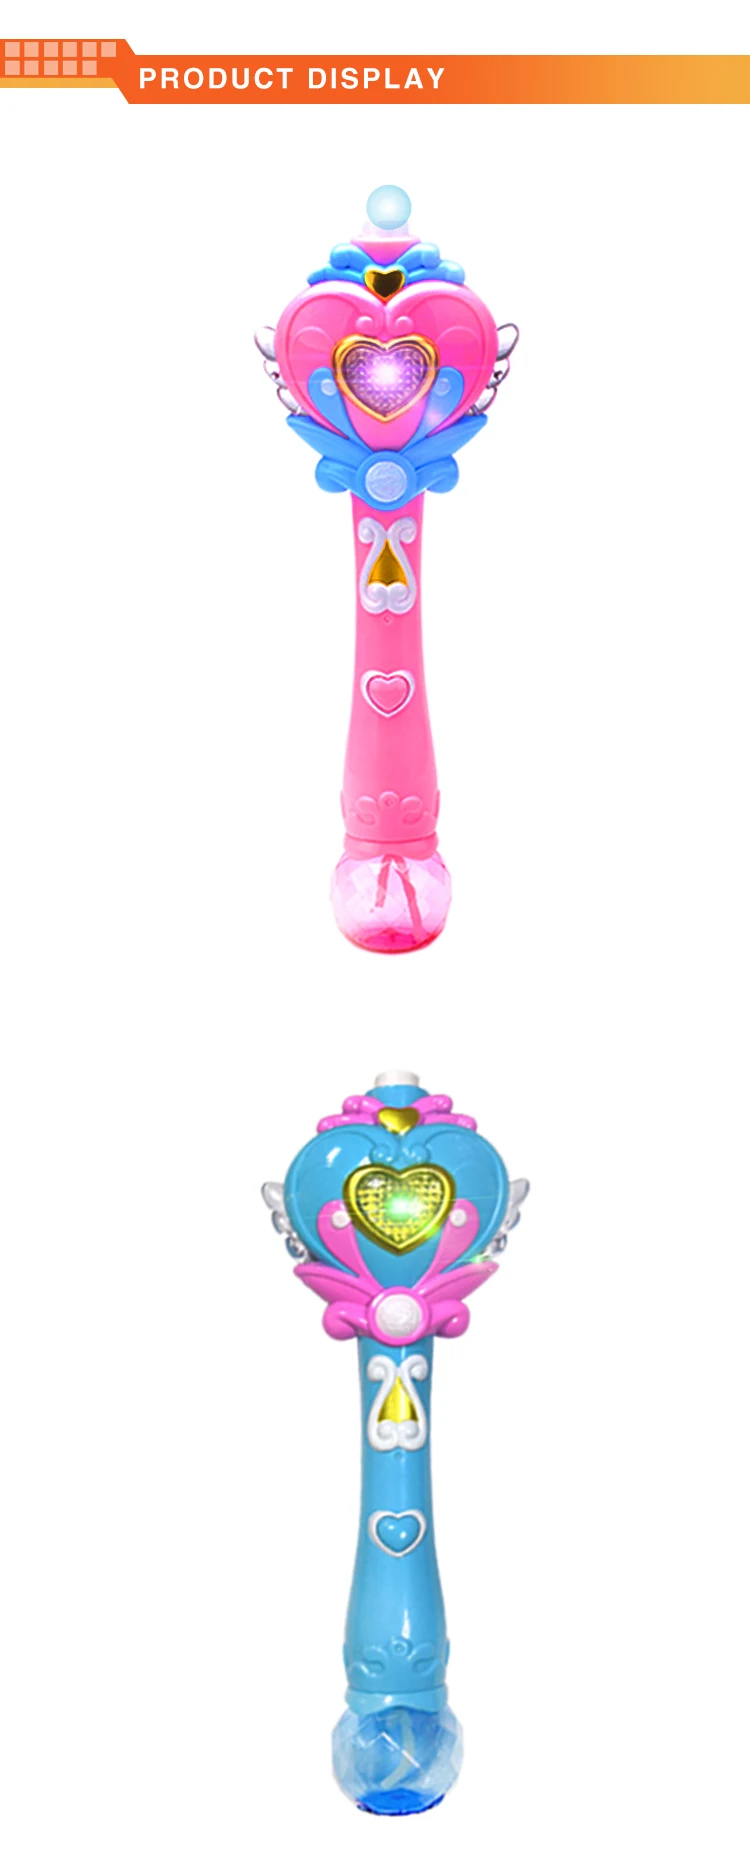 New arrival colorful heart shape bubble magic wand kids toys automatic bubble